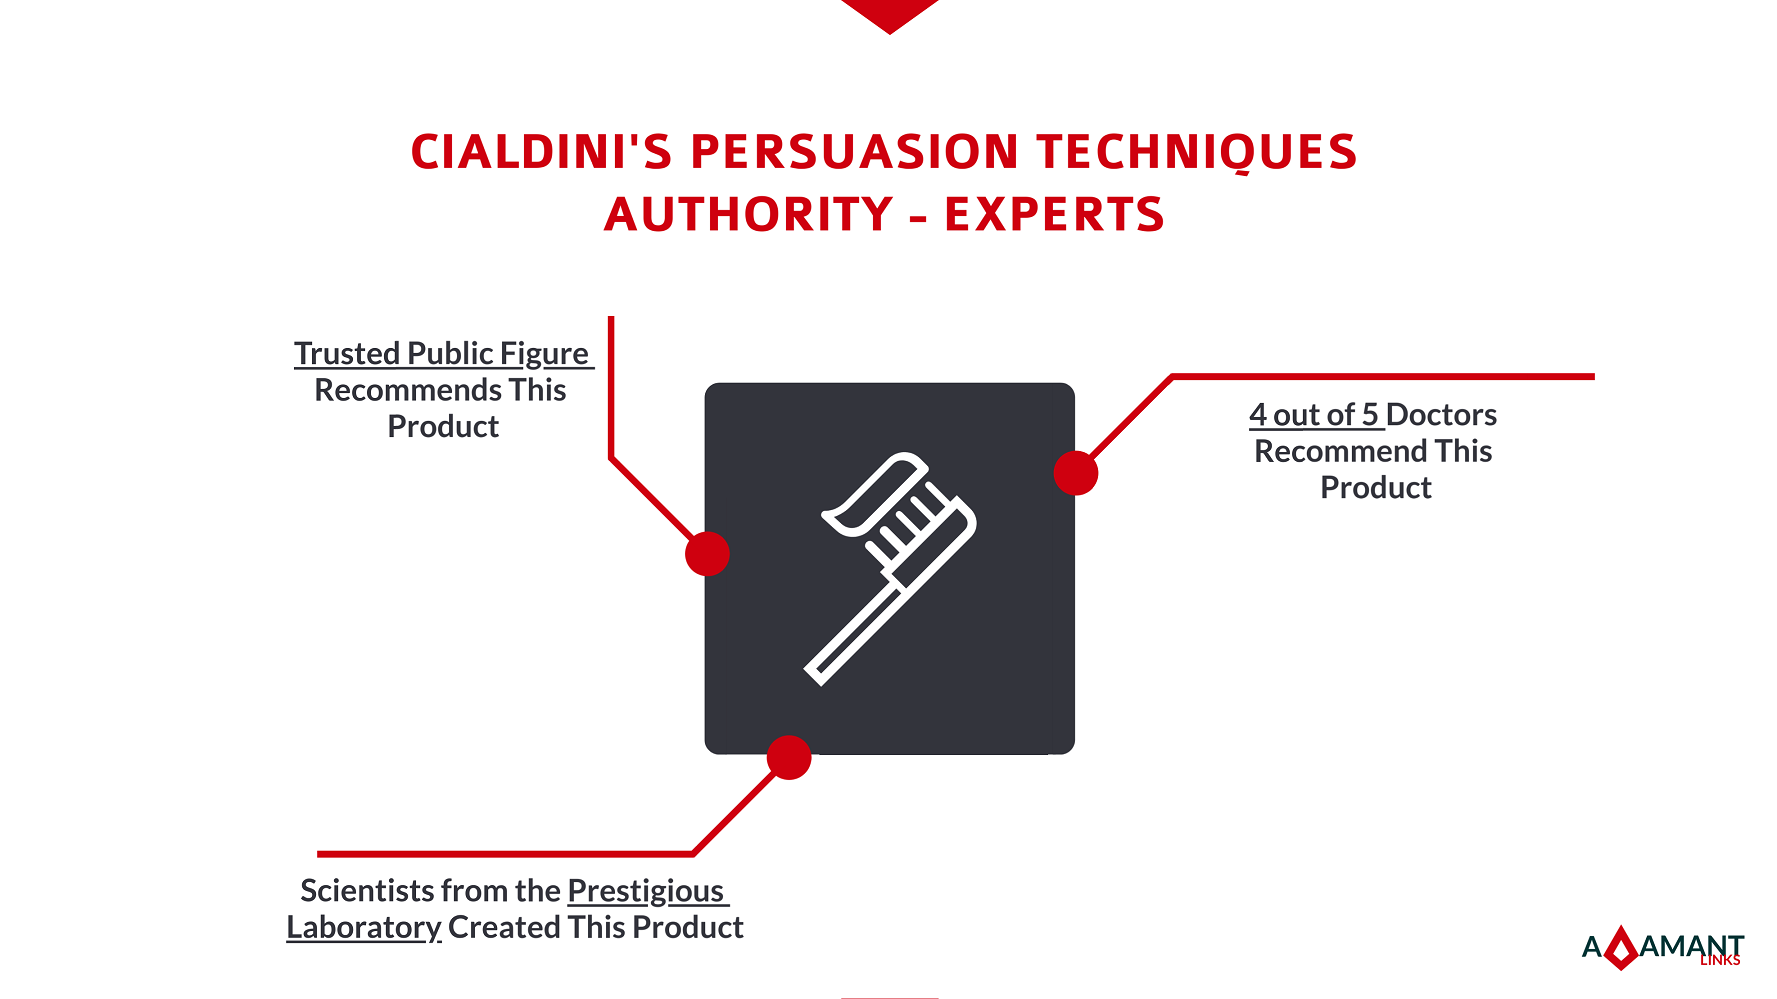 Adamant Links - Cialdini's Persuasion Techniques - Authority: Experts